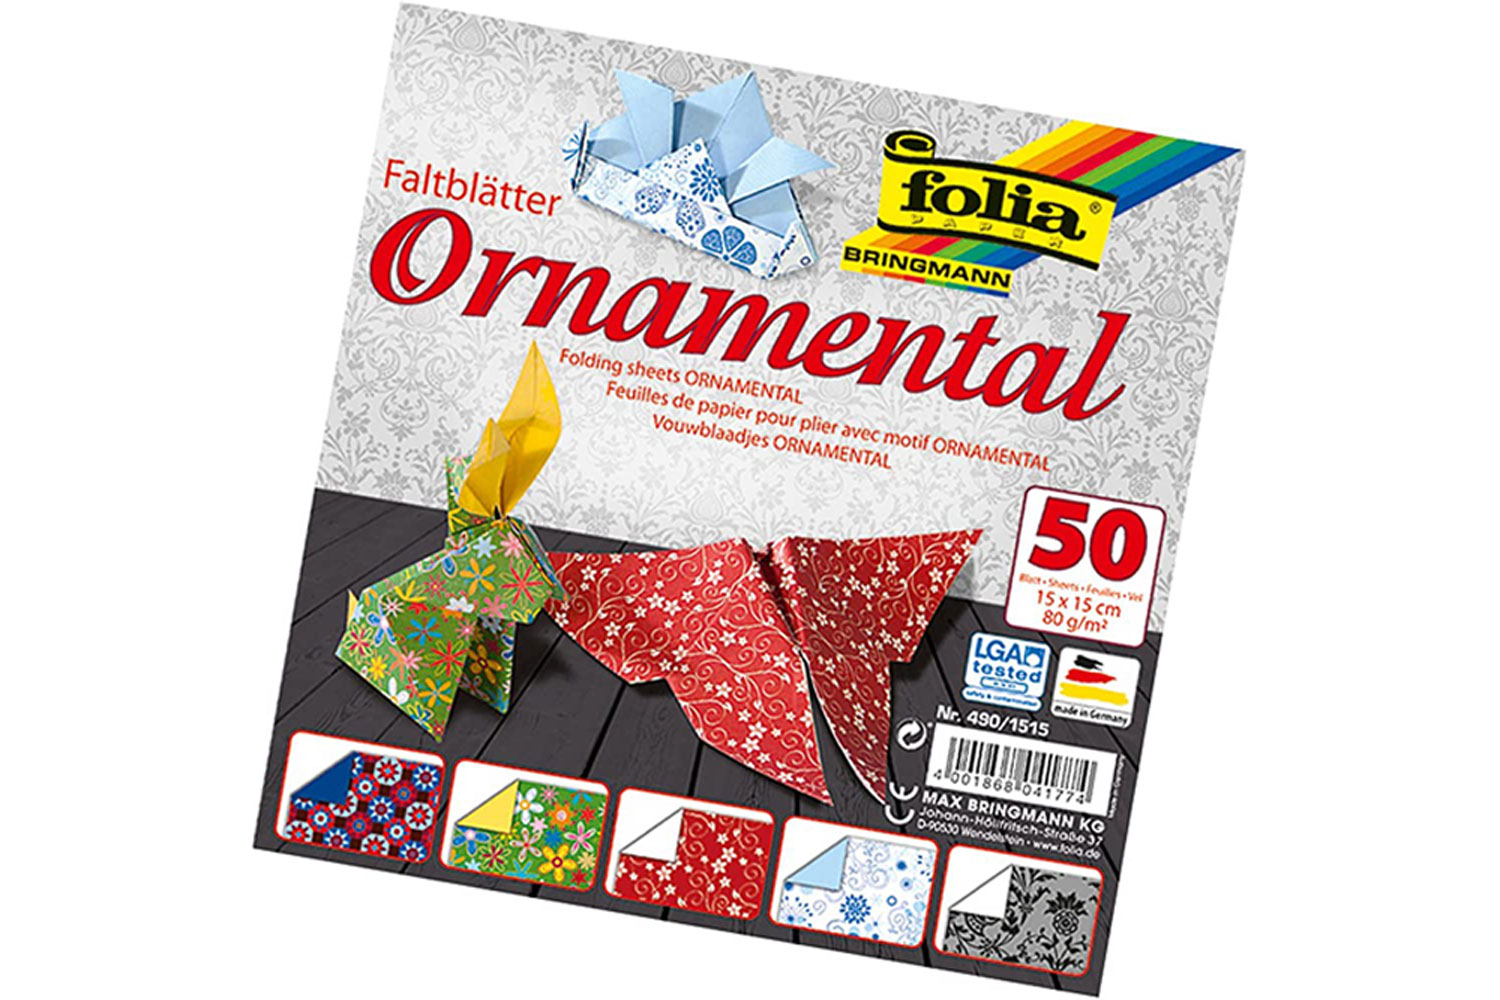 Folia Origami Kağıdı (80 gsm, 15x15 cm, Motif süs, 5 renk, 50 tabaka)